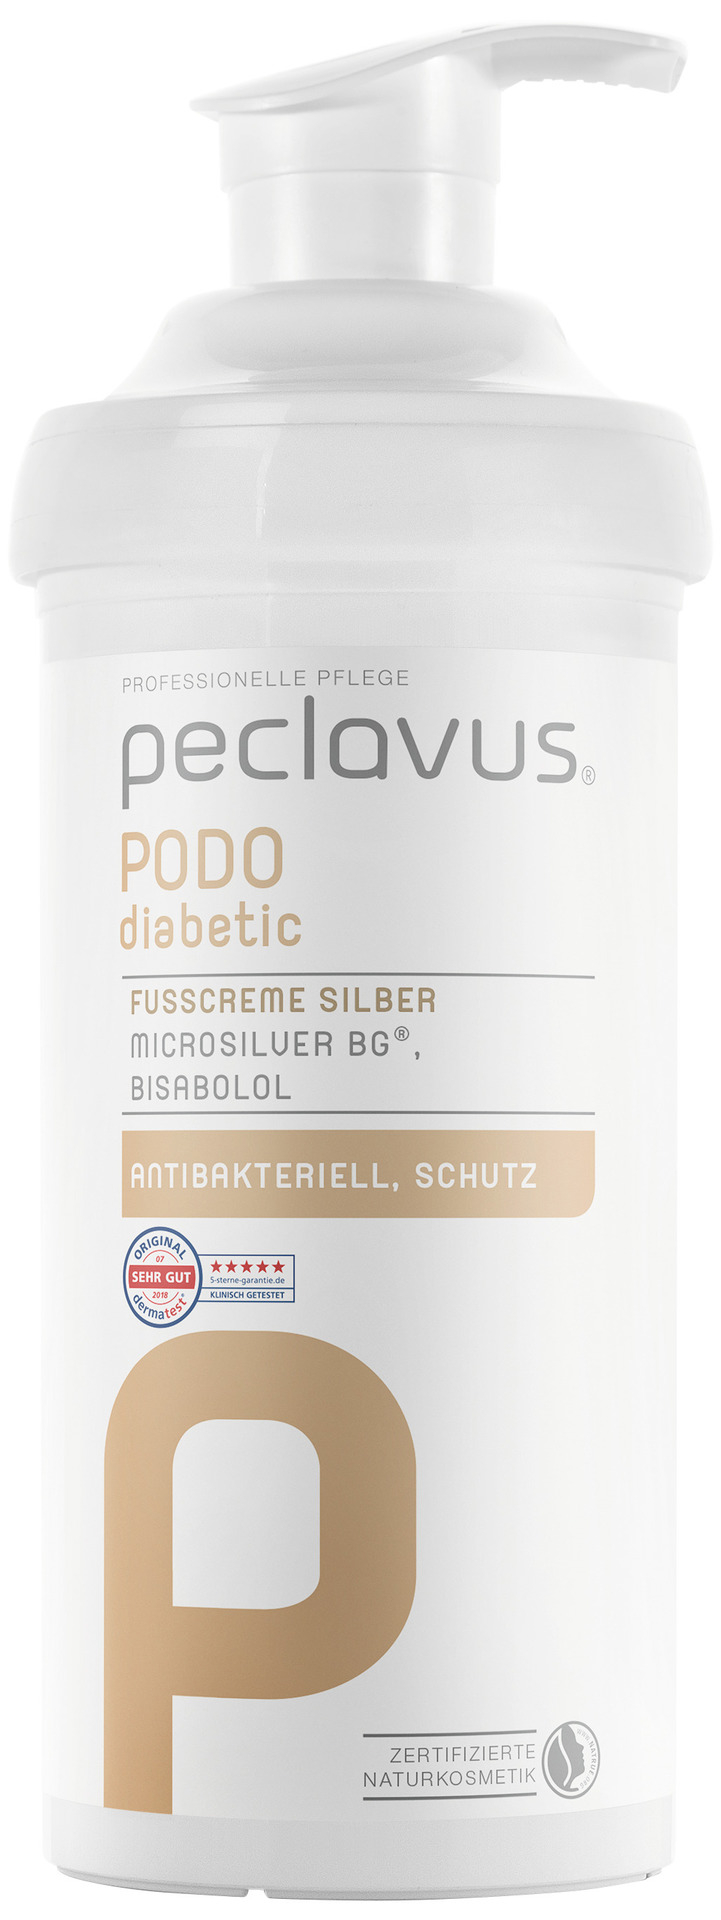 Peclavus PODOdiabetic Fußcreme Silber | 500 ml